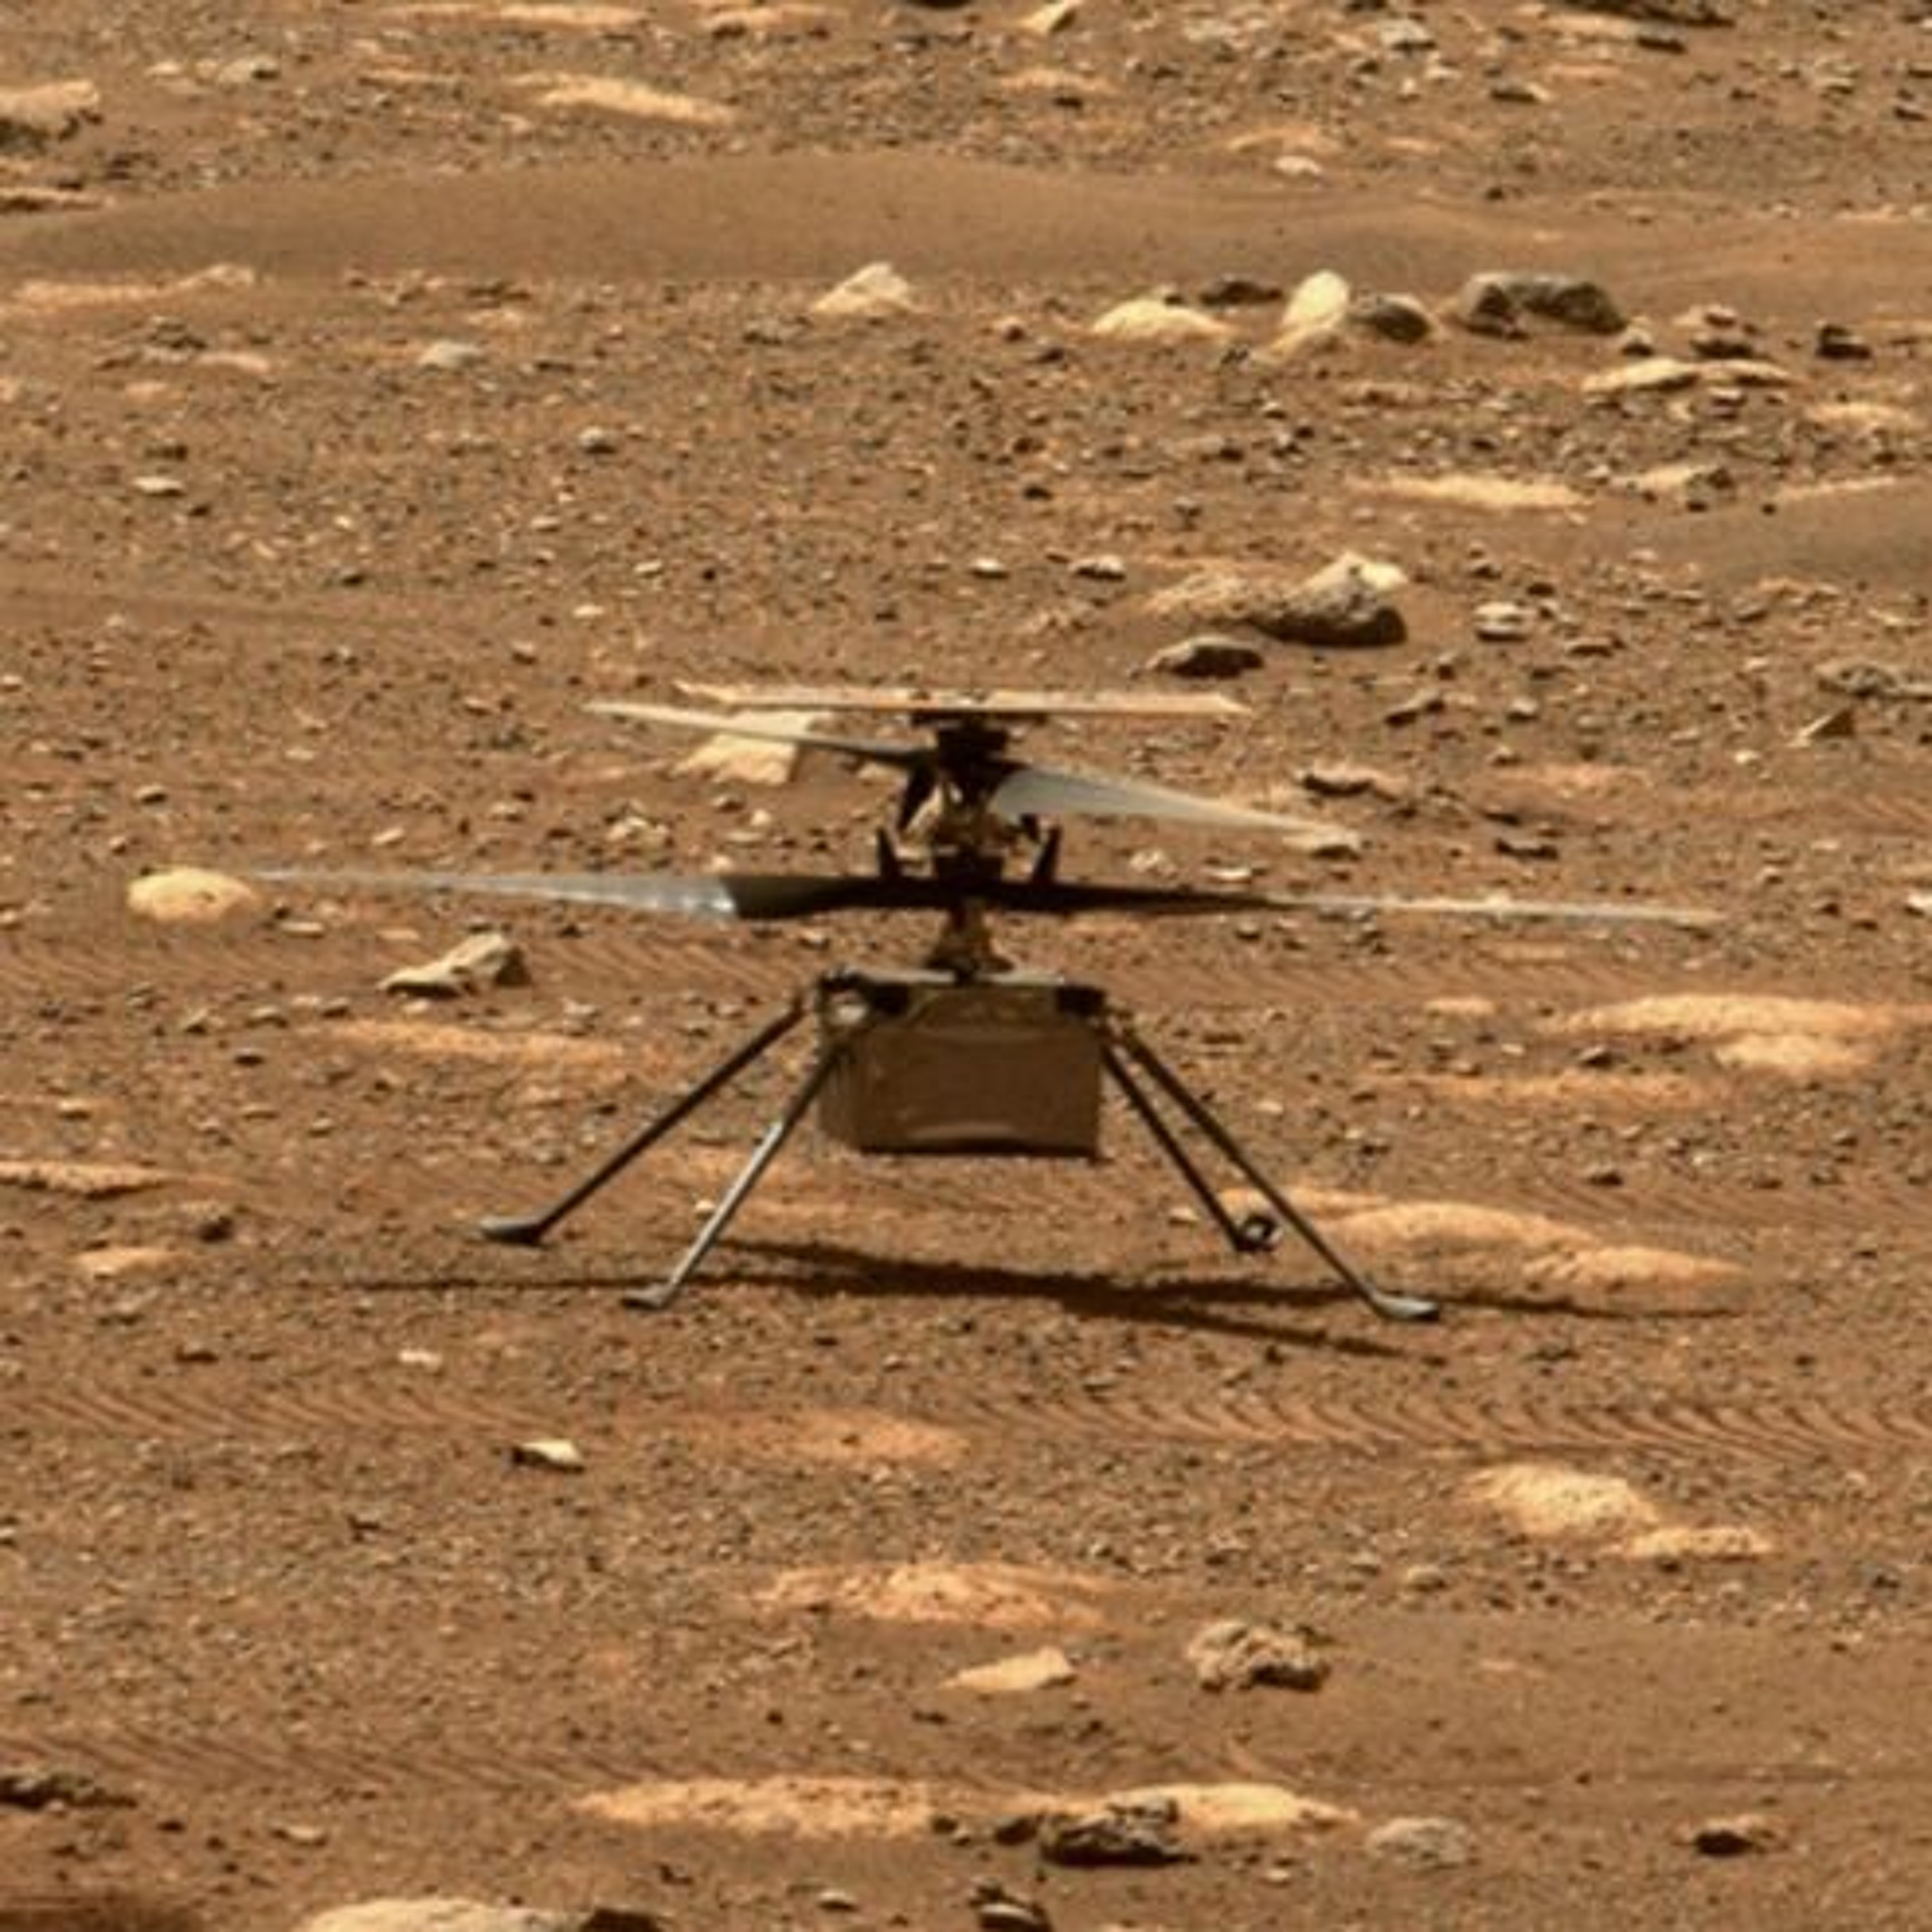 Mars Exploration with Chris Herd